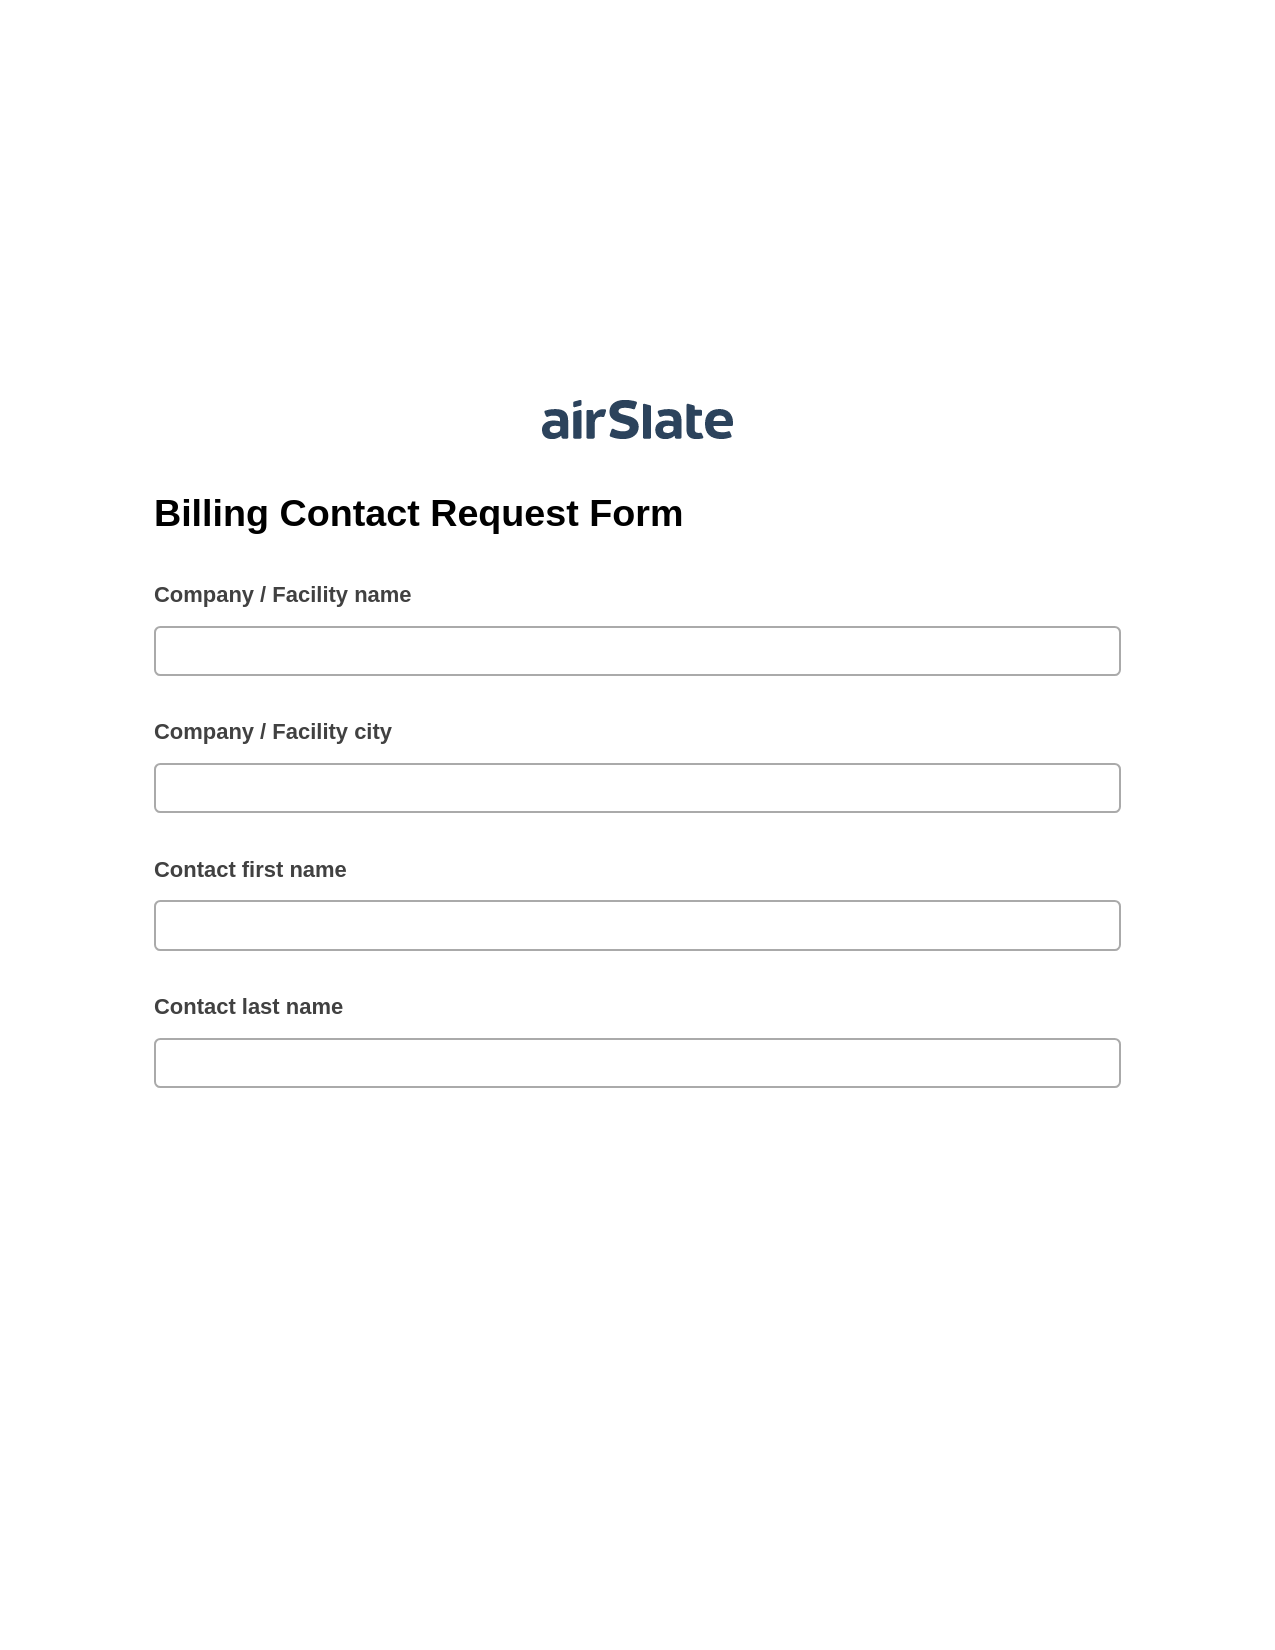 Multirole Billing Contact Request Form Pre-fill from CSV File Bot, SendGrid send Campaign bot, Slack Notification Postfinish Bot